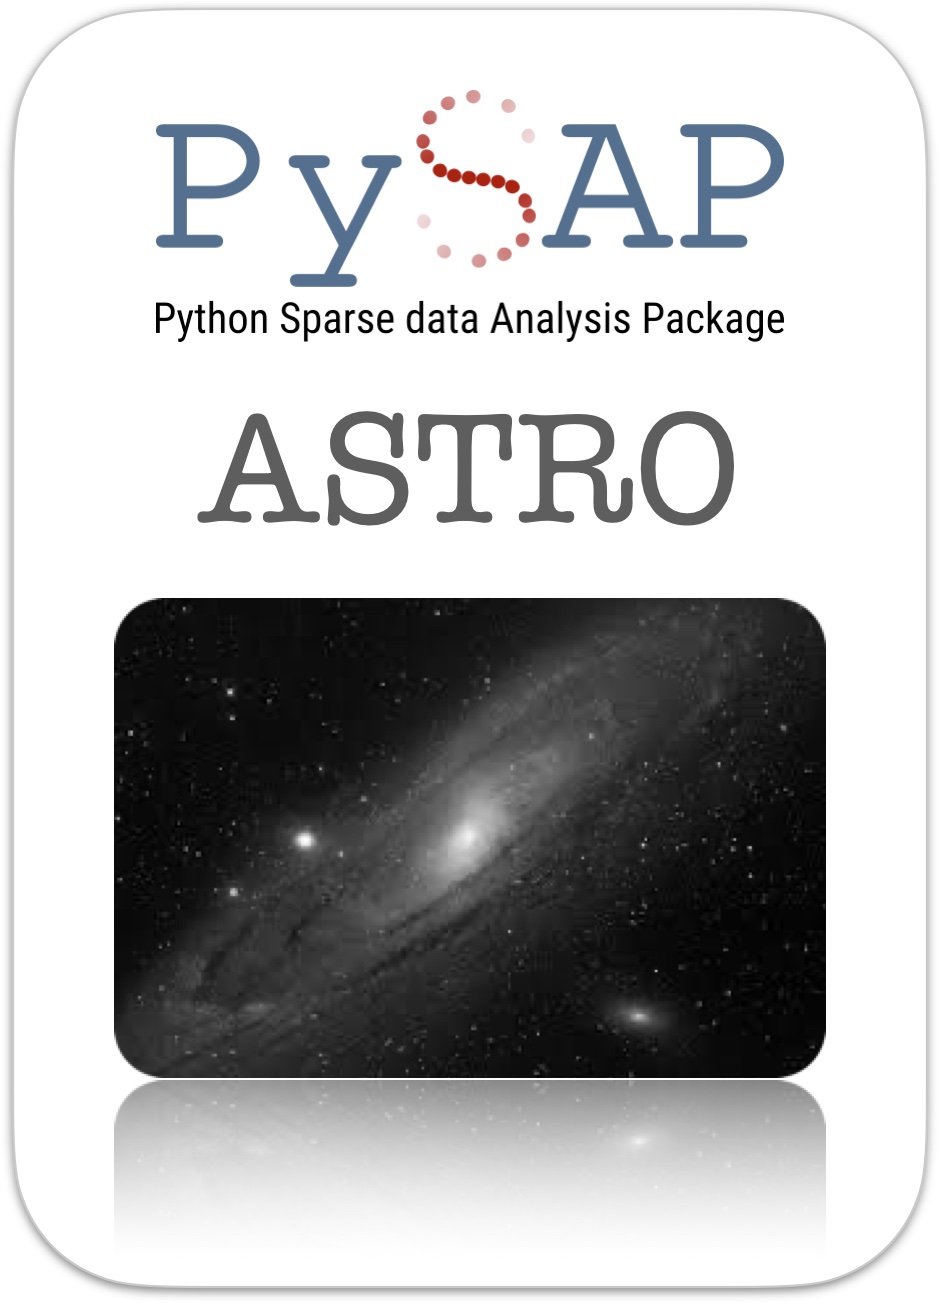 PySAP-Astro